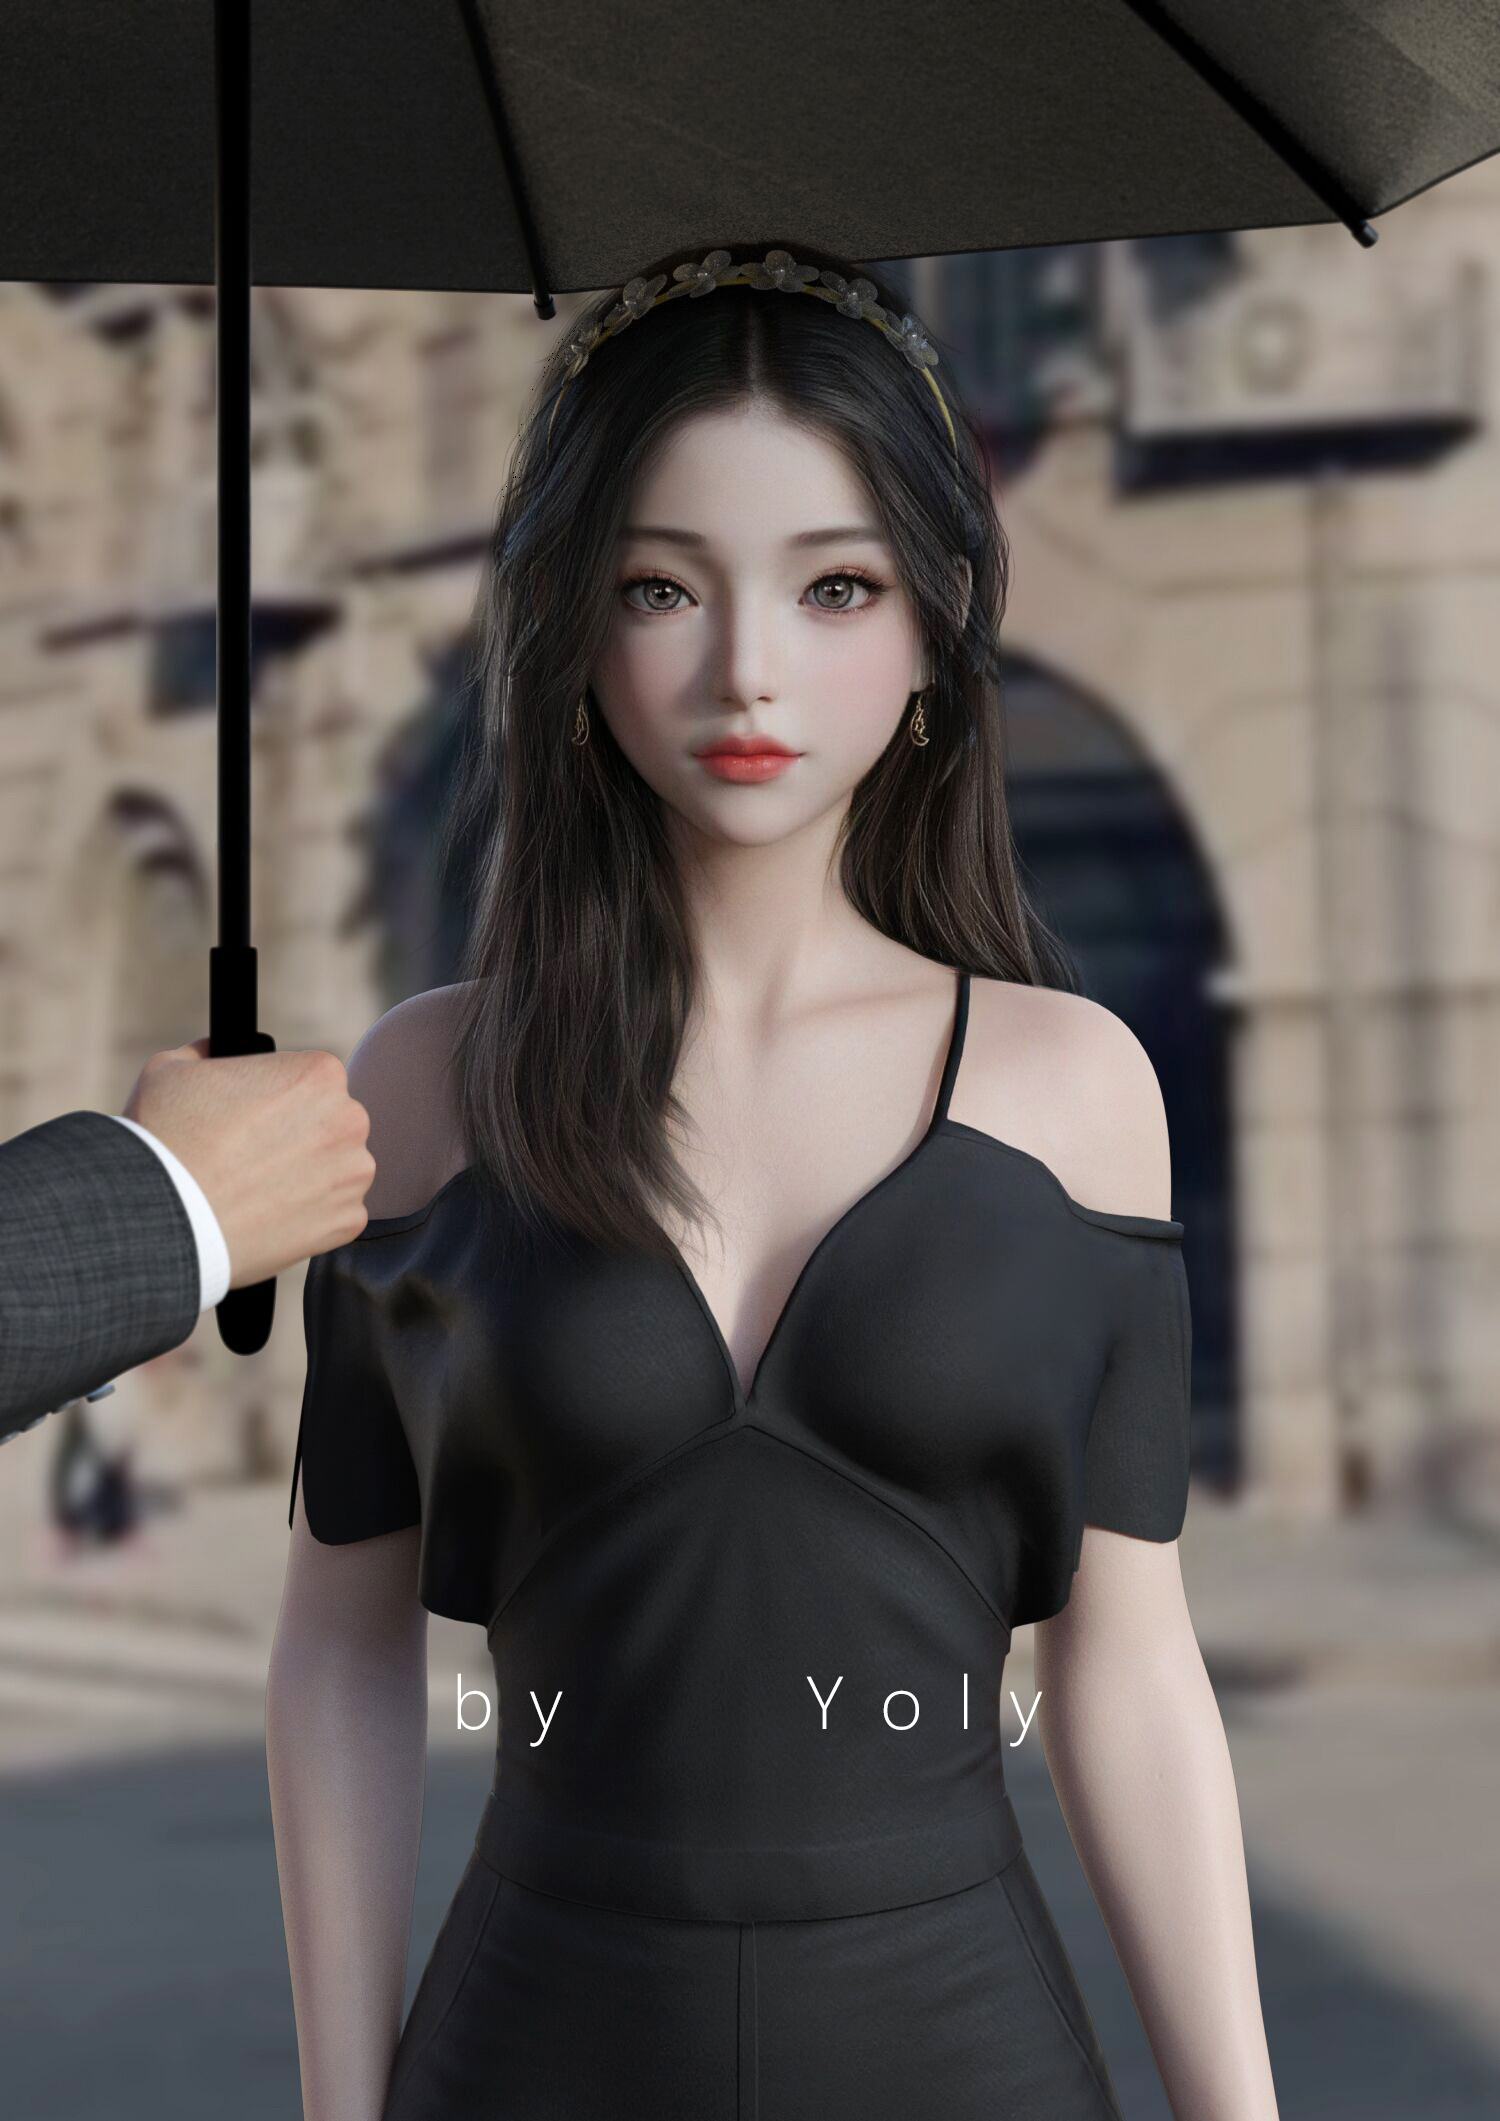 General 1500x2121 CGI digital art Asian Yoly women long hair black hair skirt umbrella dress